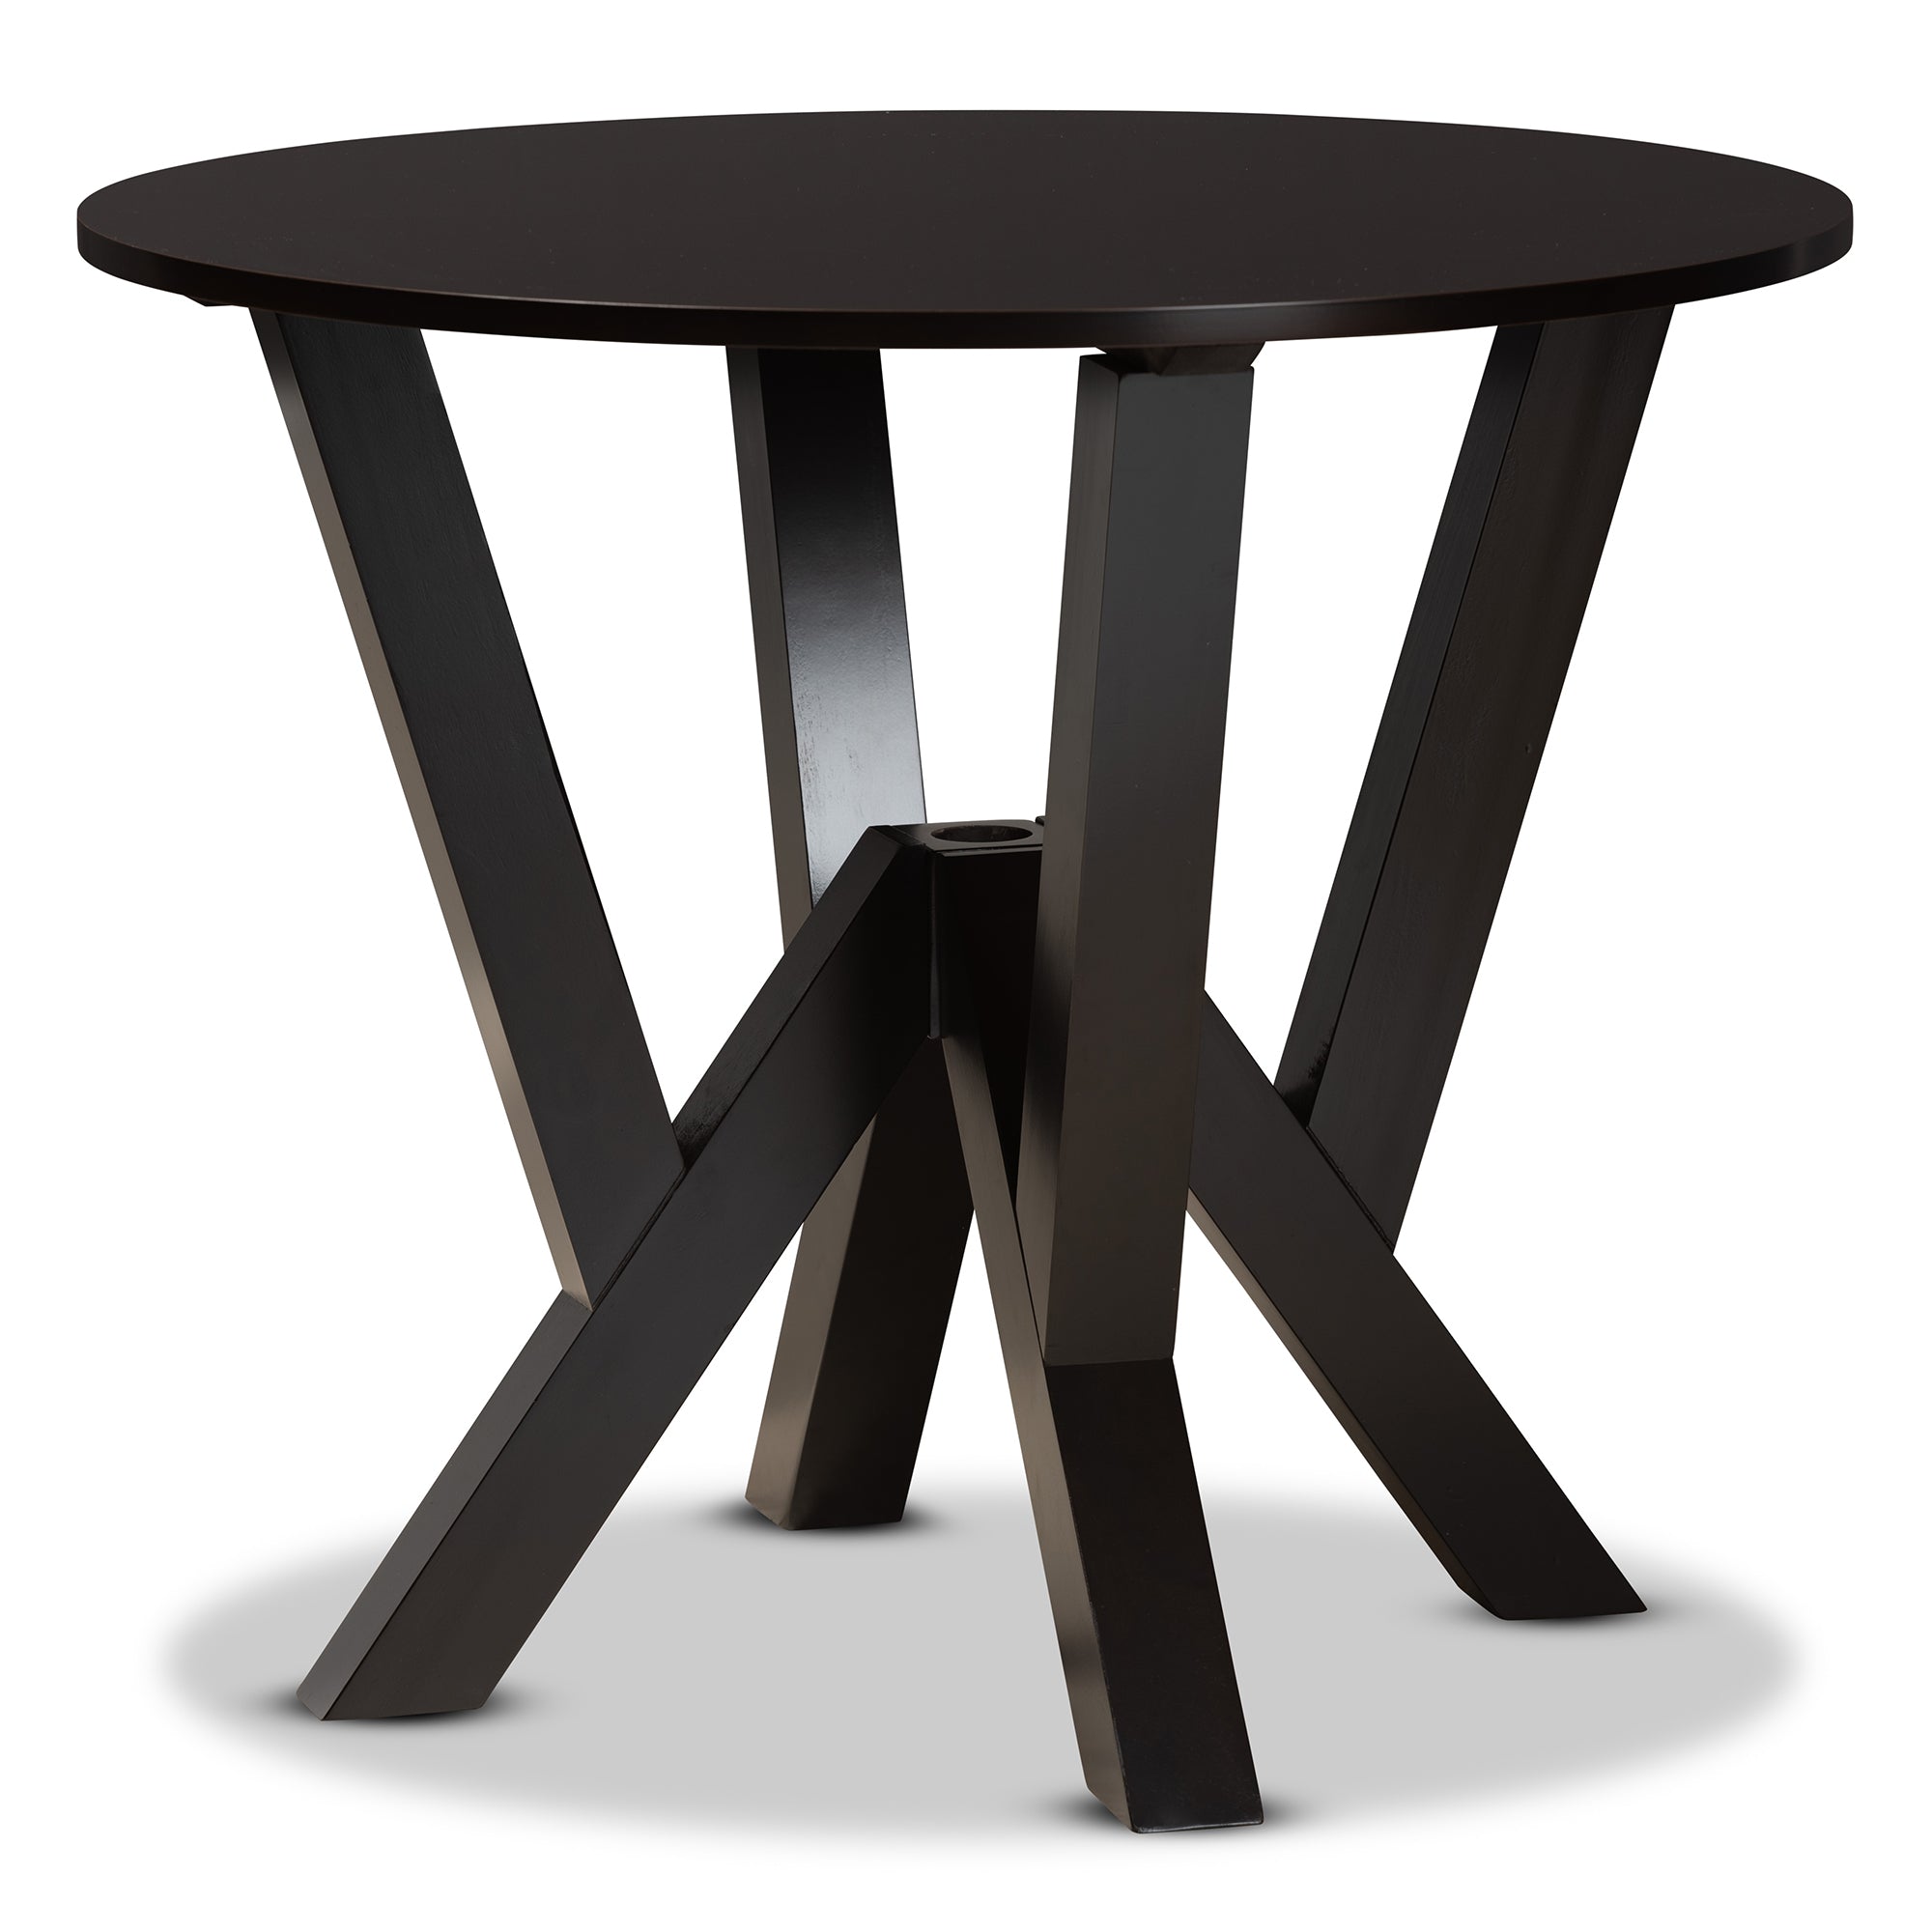 Nada Modern Table & Dining Chairs 5-Piece-Dining Set-Baxton Studio - WI-Wall2Wall Furnishings